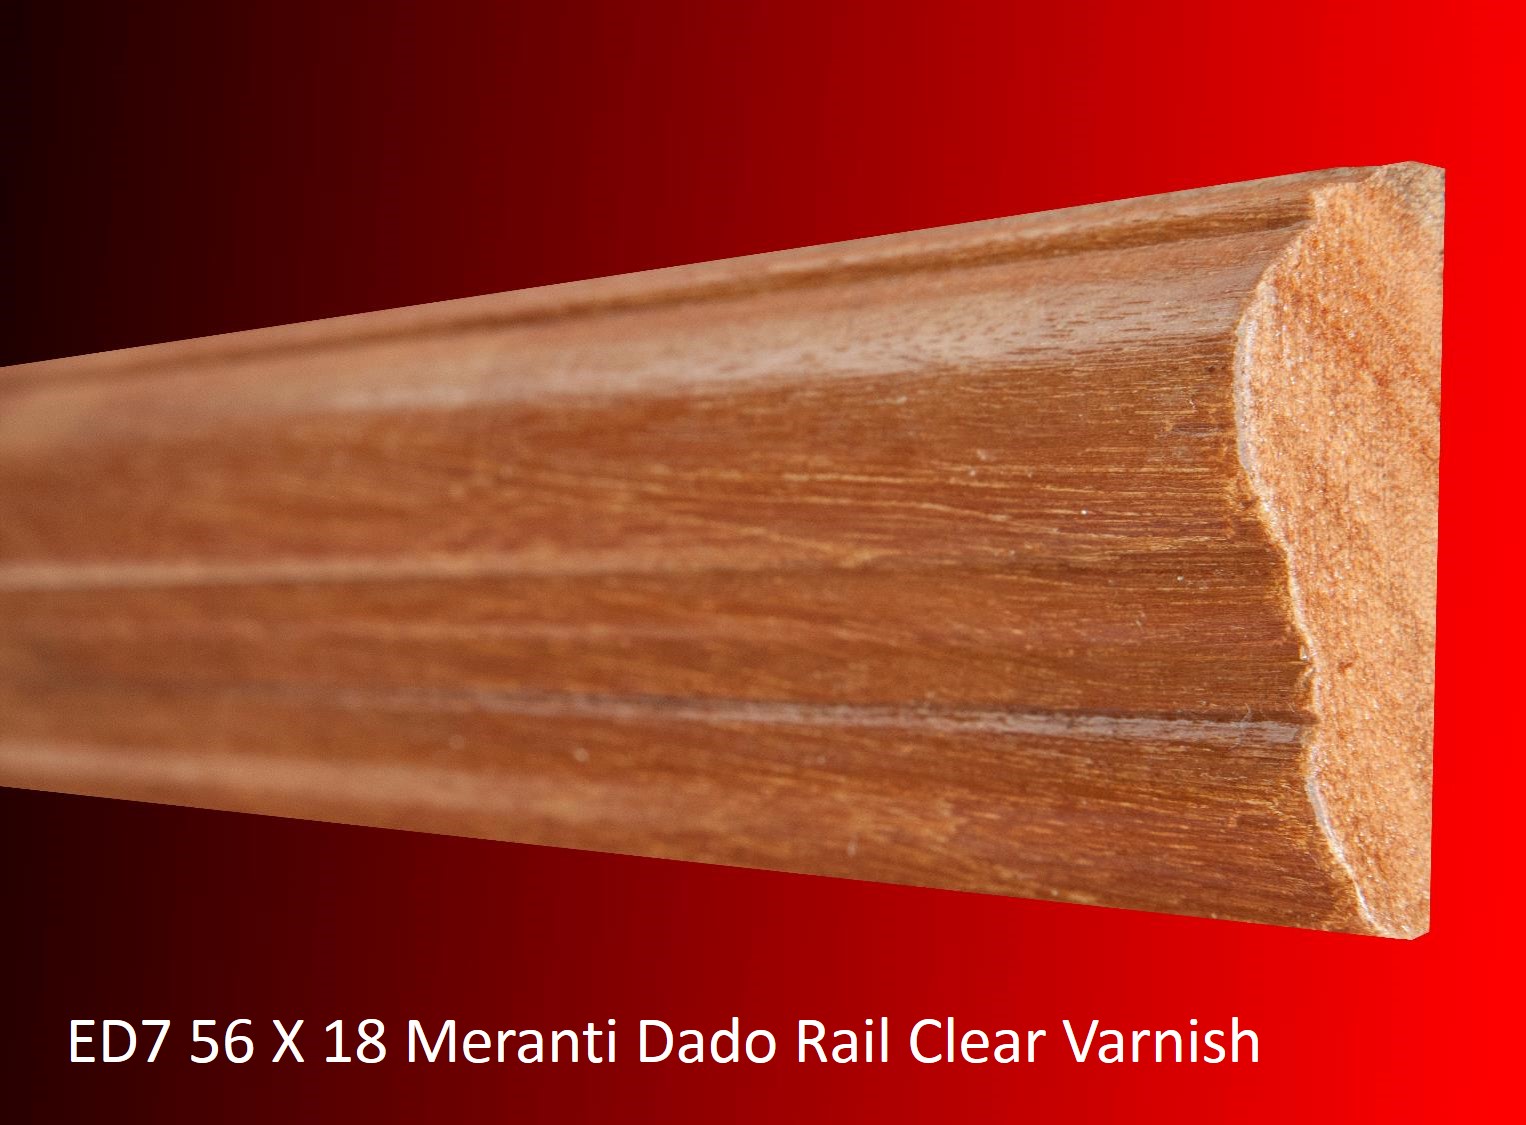 ED7 56 X 18 Meranti Dado Rail Clear Varnish